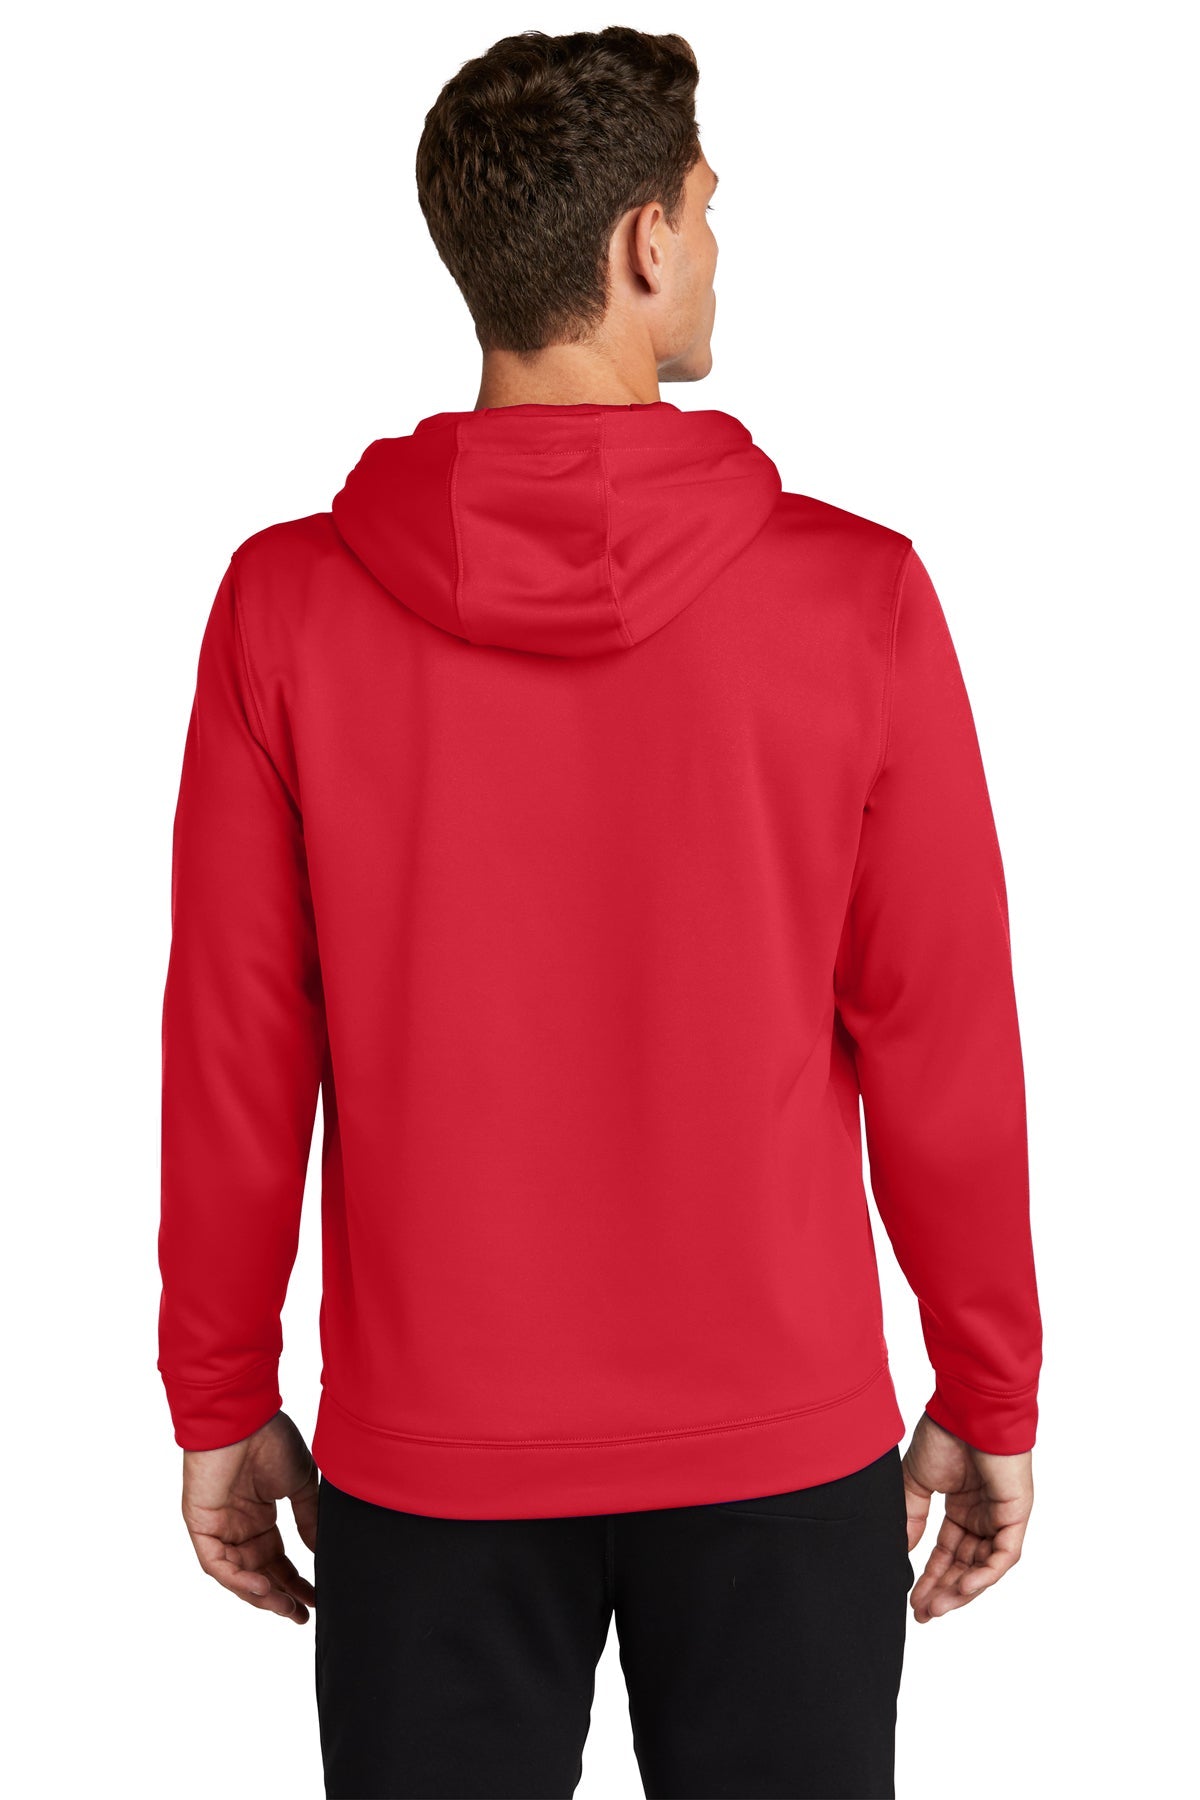 sport-tek_f244 _deep red_company_logo_sweatshirts